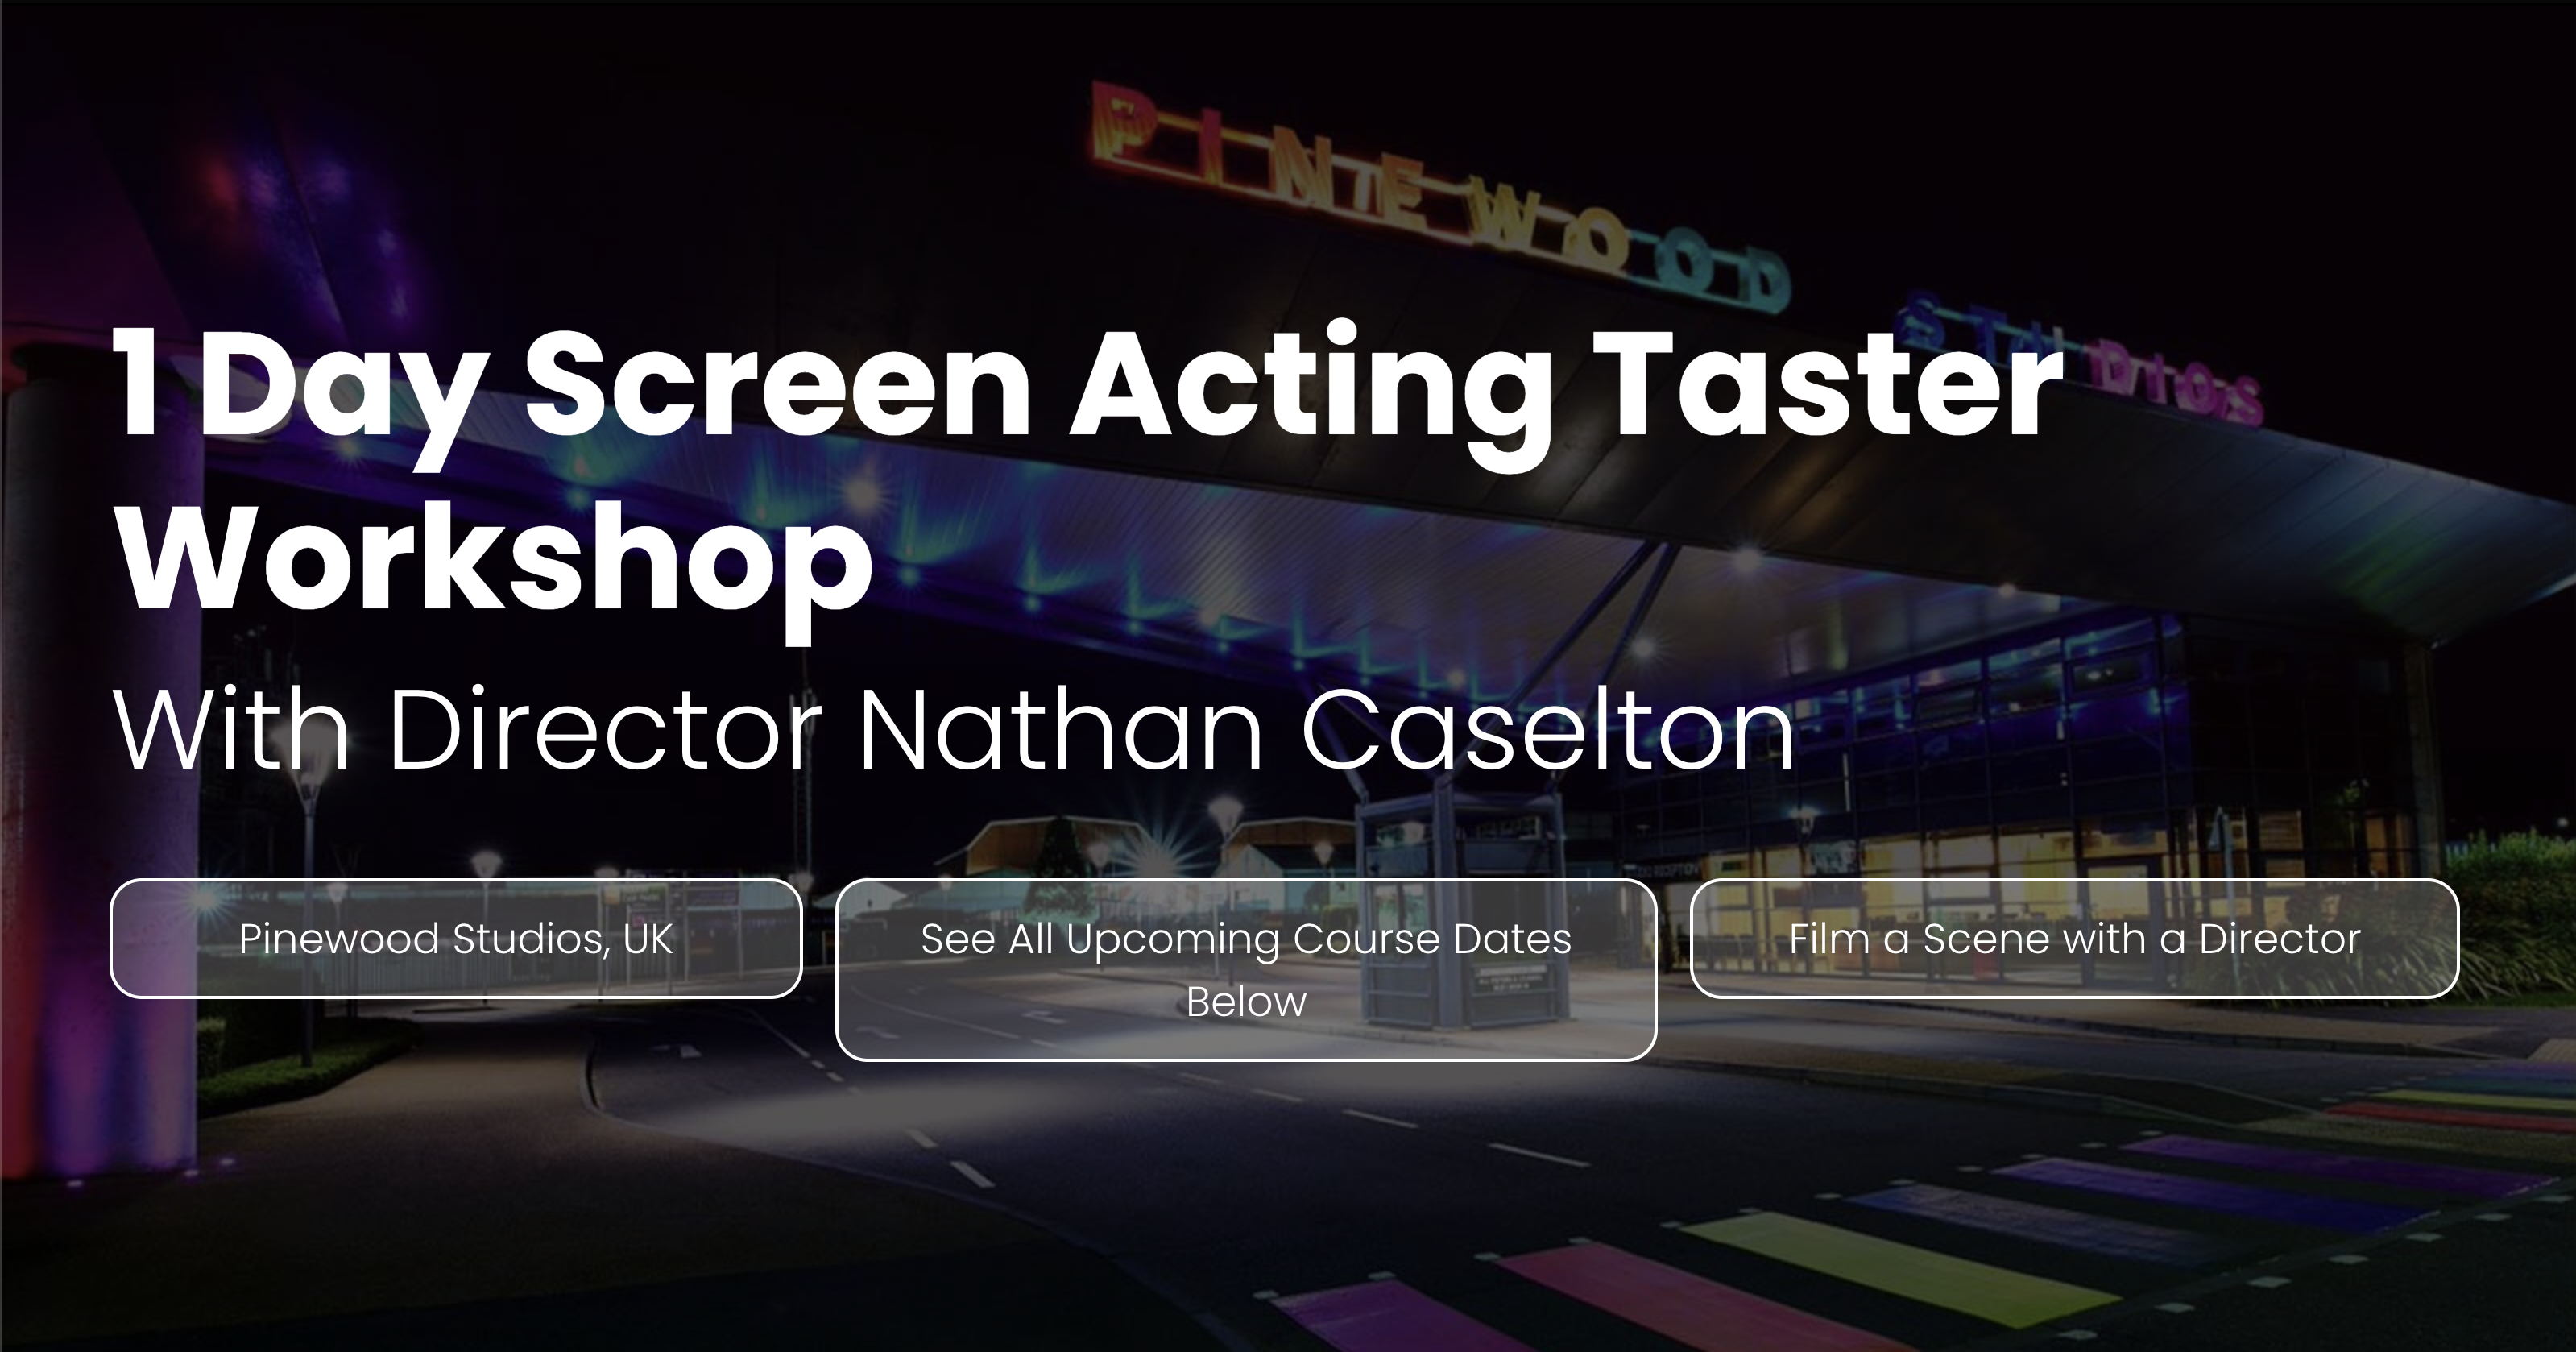 1 Day Screen Acting Taster Workshop